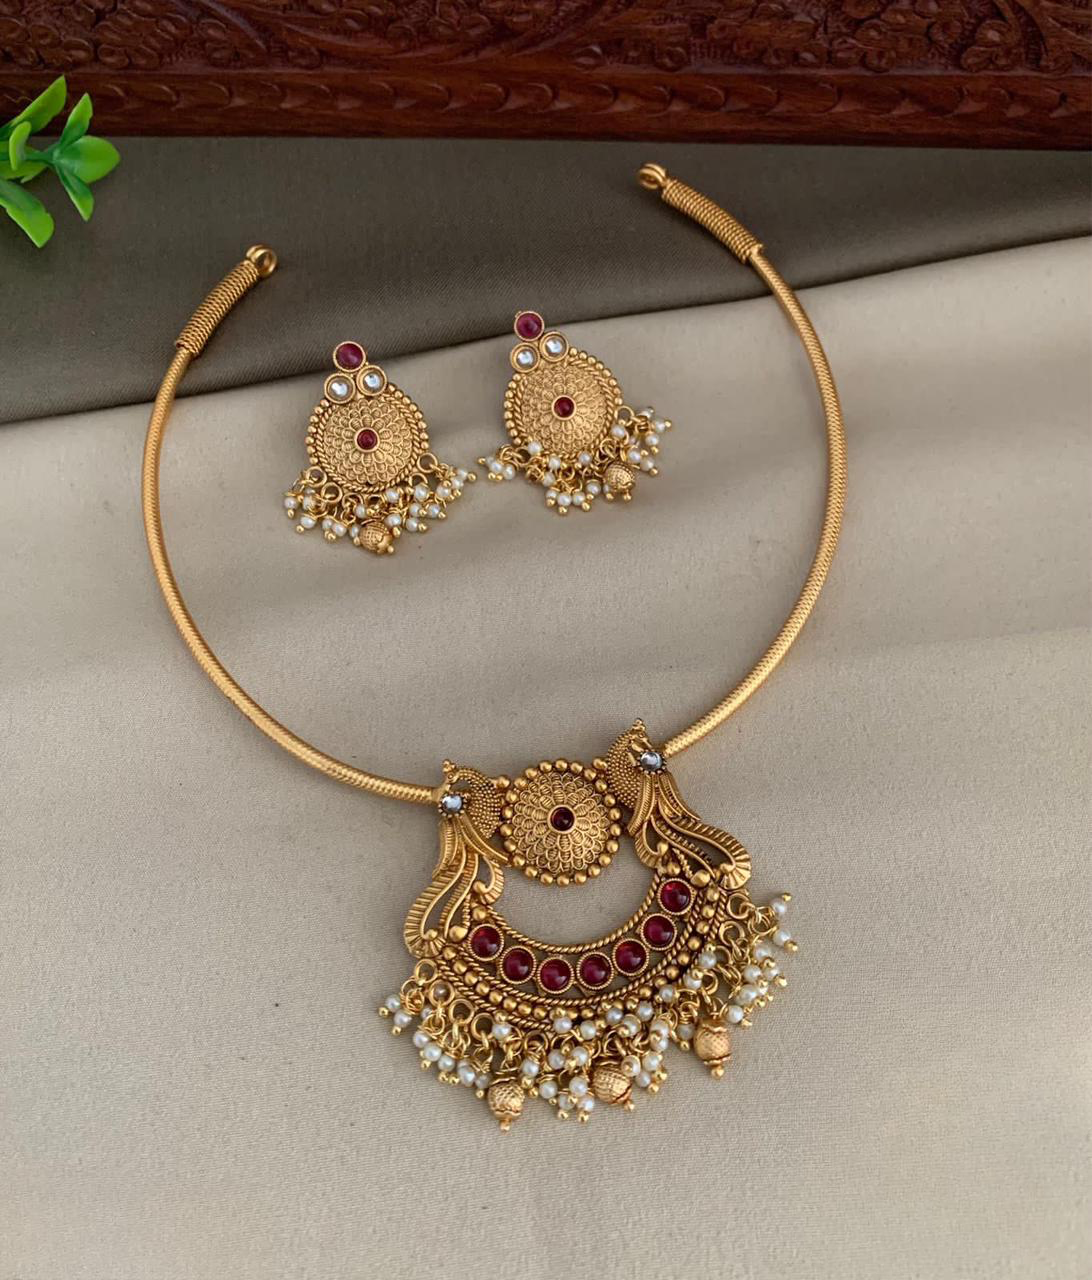 Latest Matte Fashion Jewelry -Pendant Necklace Set with Kanti -White